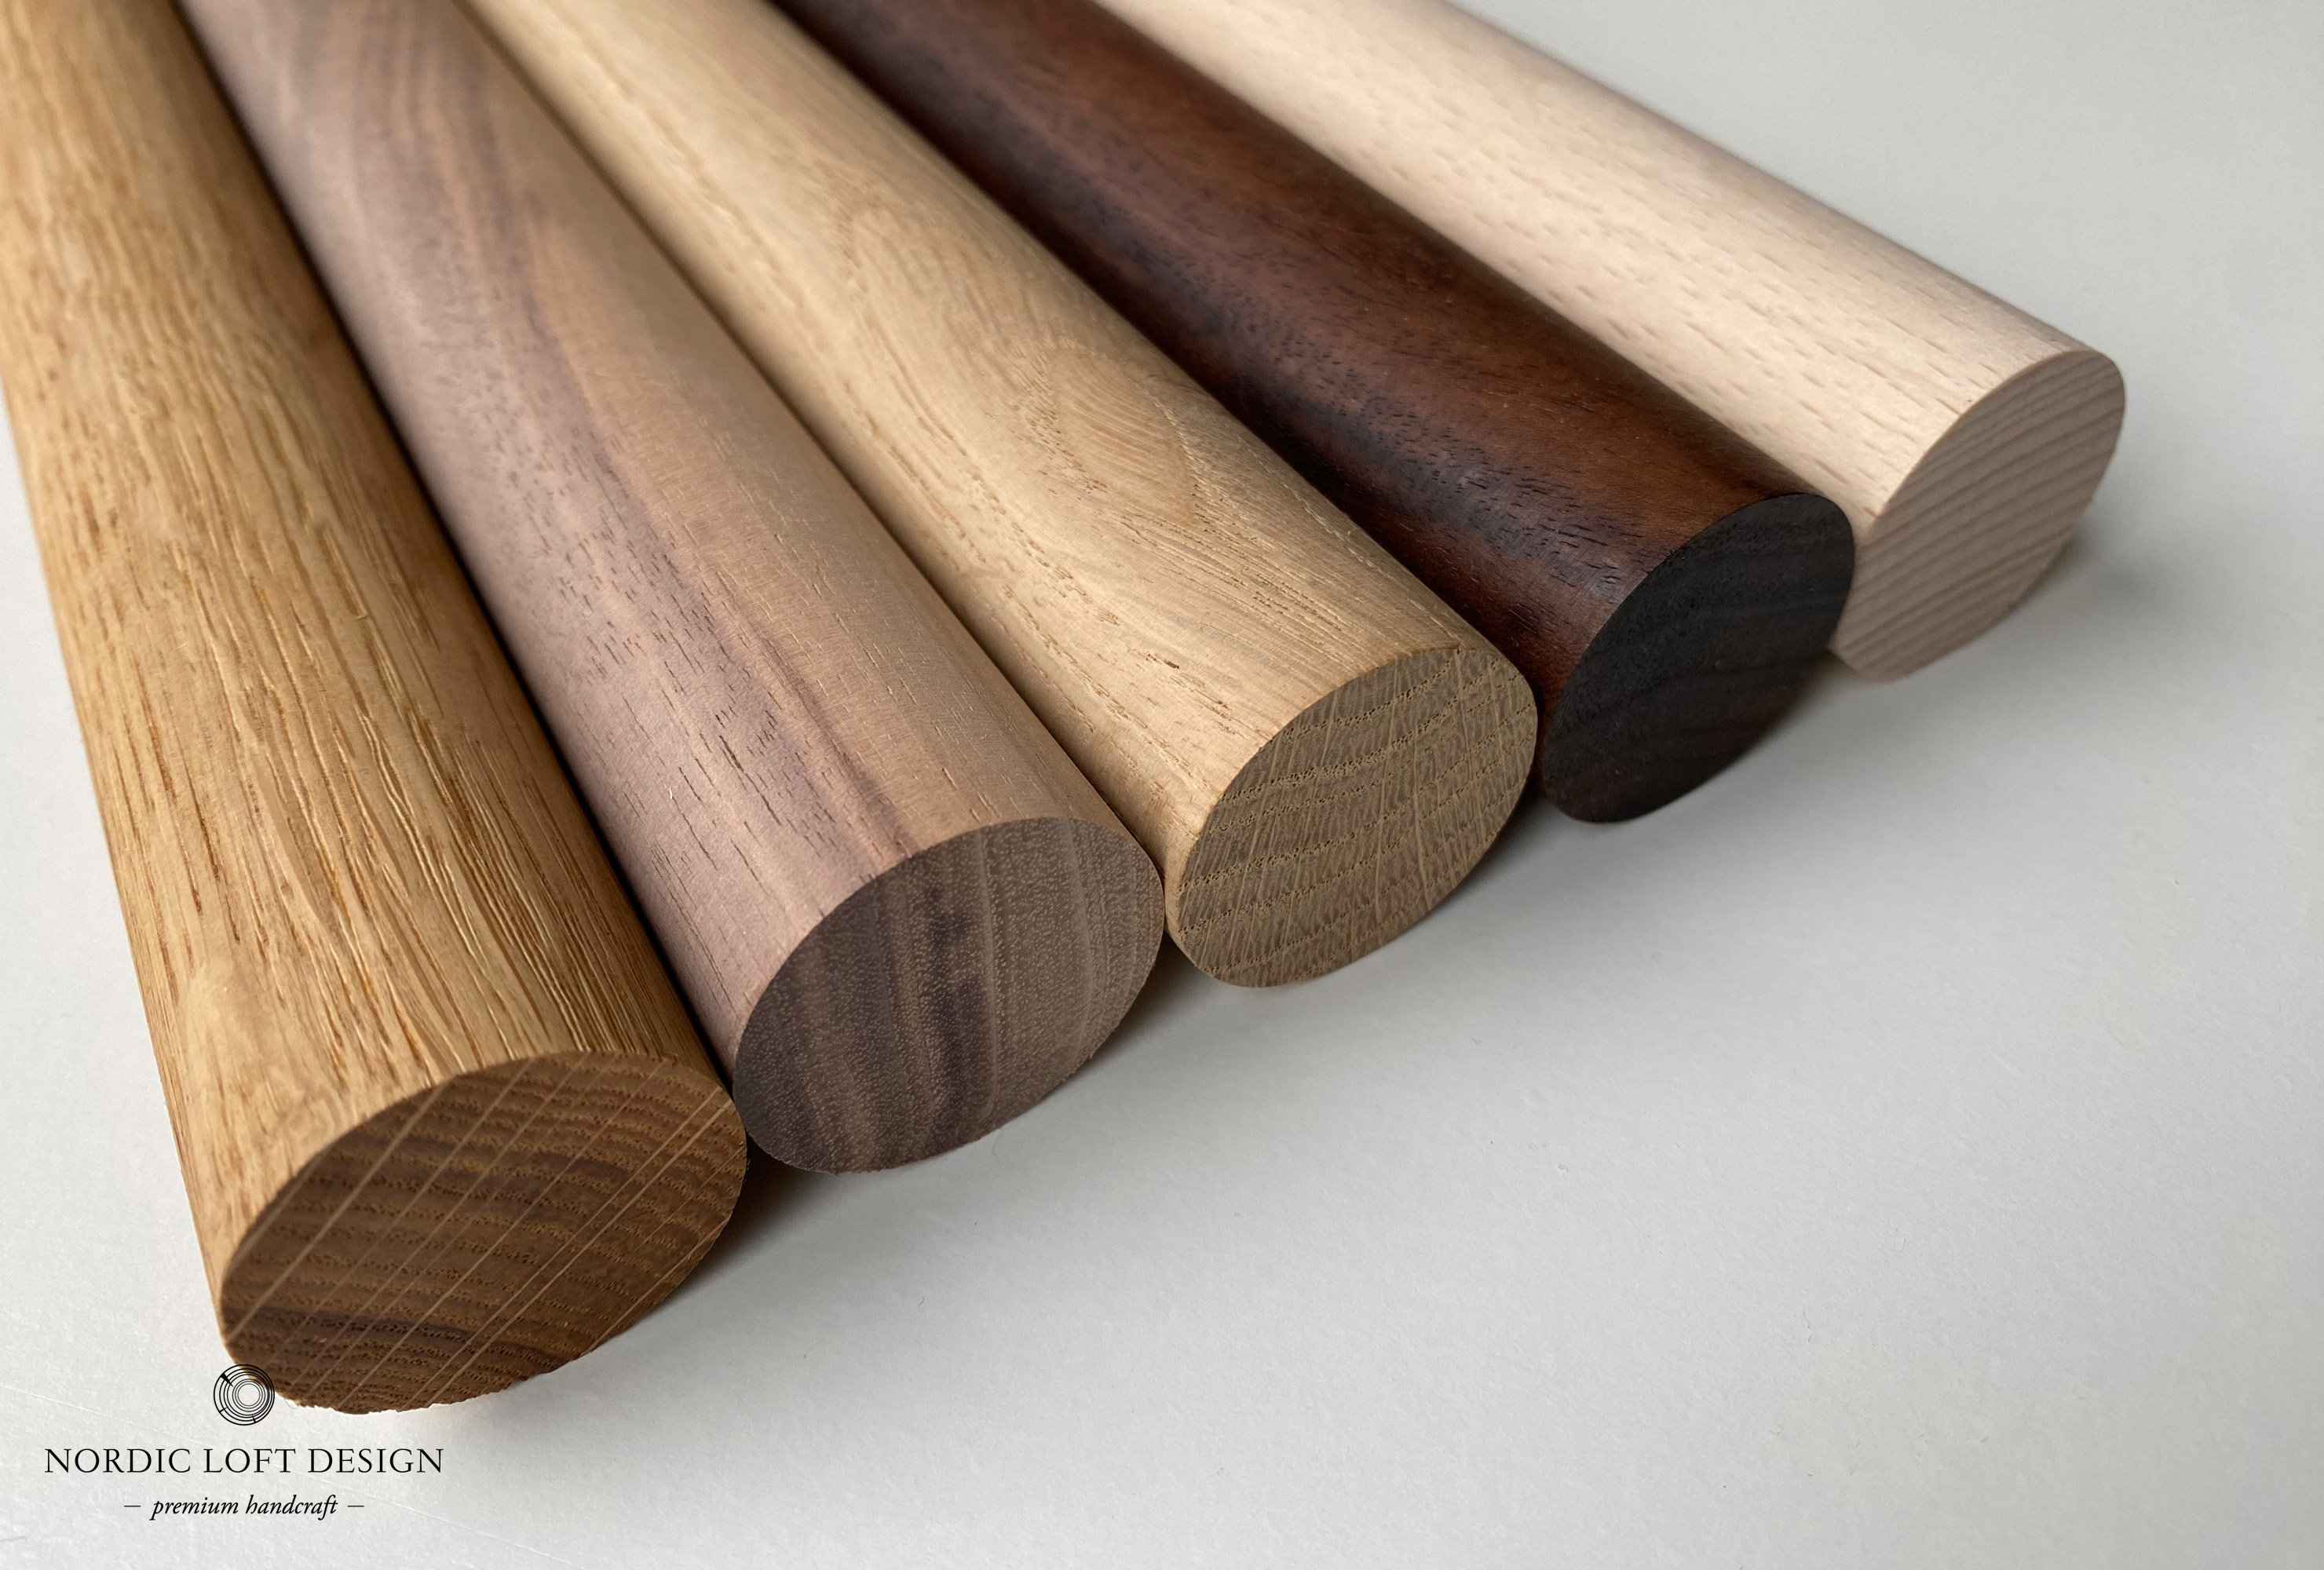 50PCS Dowel Rods Wood Sticks Wooden Dowel Rods - 1/4 x 12 Inch Precut Dowels